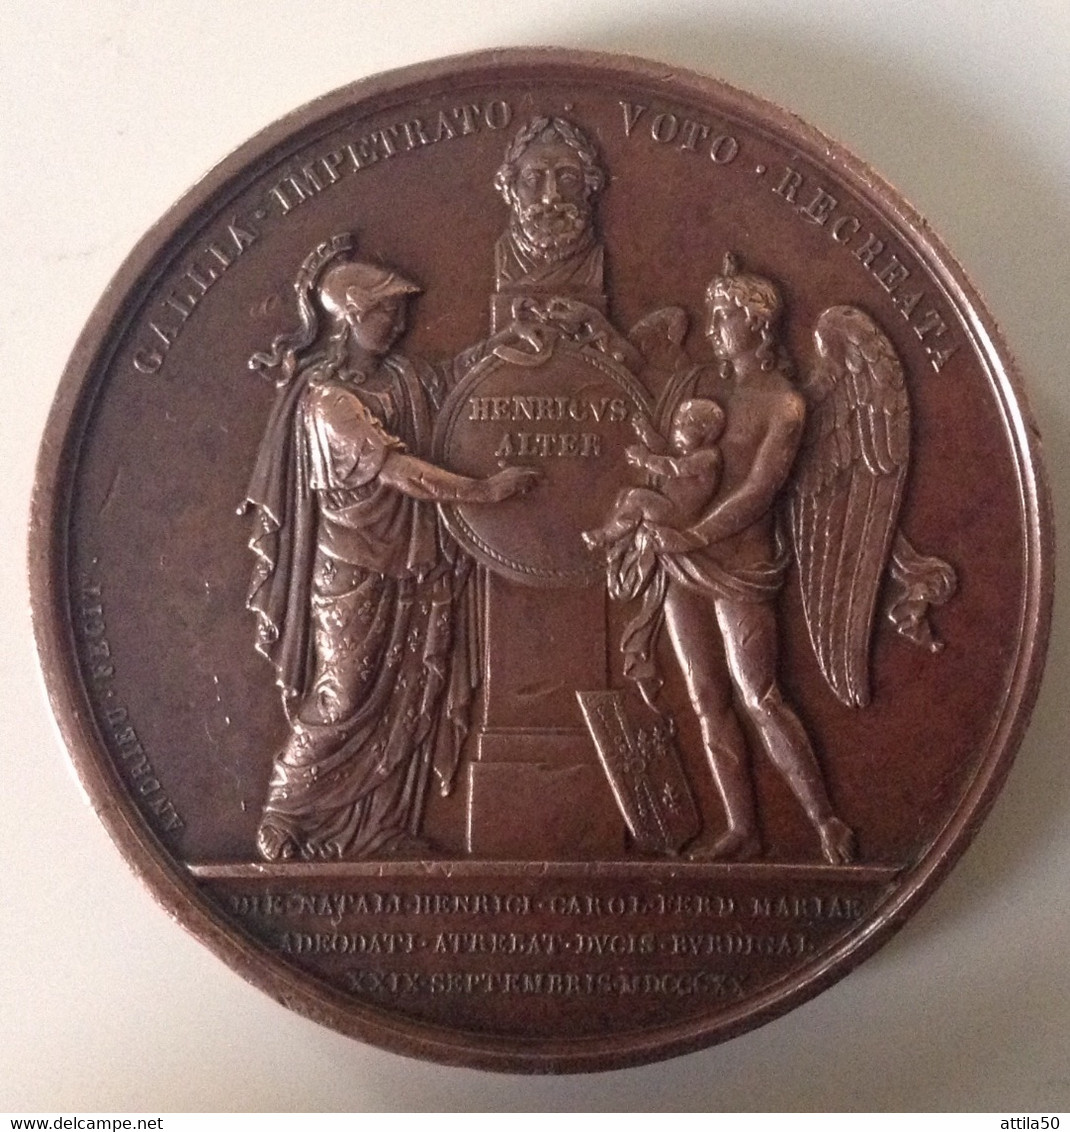 BRONZE MEDAL OF LVDOVICVS XVIII FRANC * ET* NAV* REX . YEAR 1820 Medaglia Borbonica- Nascita Figlio Di Maria Carolina - Monarchia/ Nobiltà